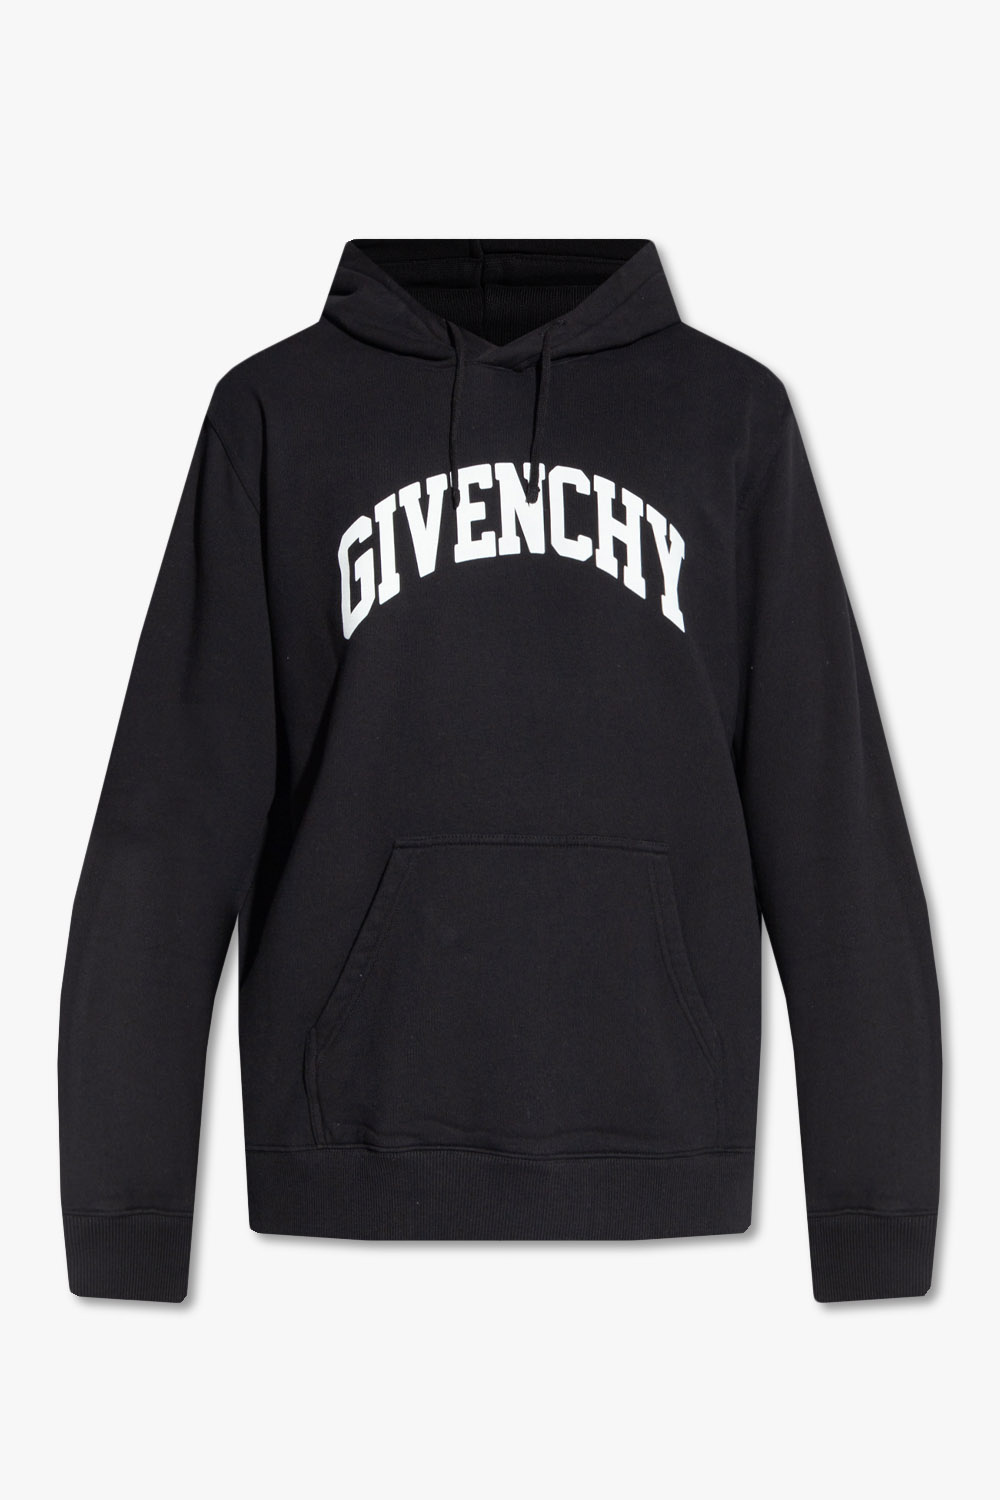 Givenchy Givenchy Kids TEEN multicolour logo sweatshirt